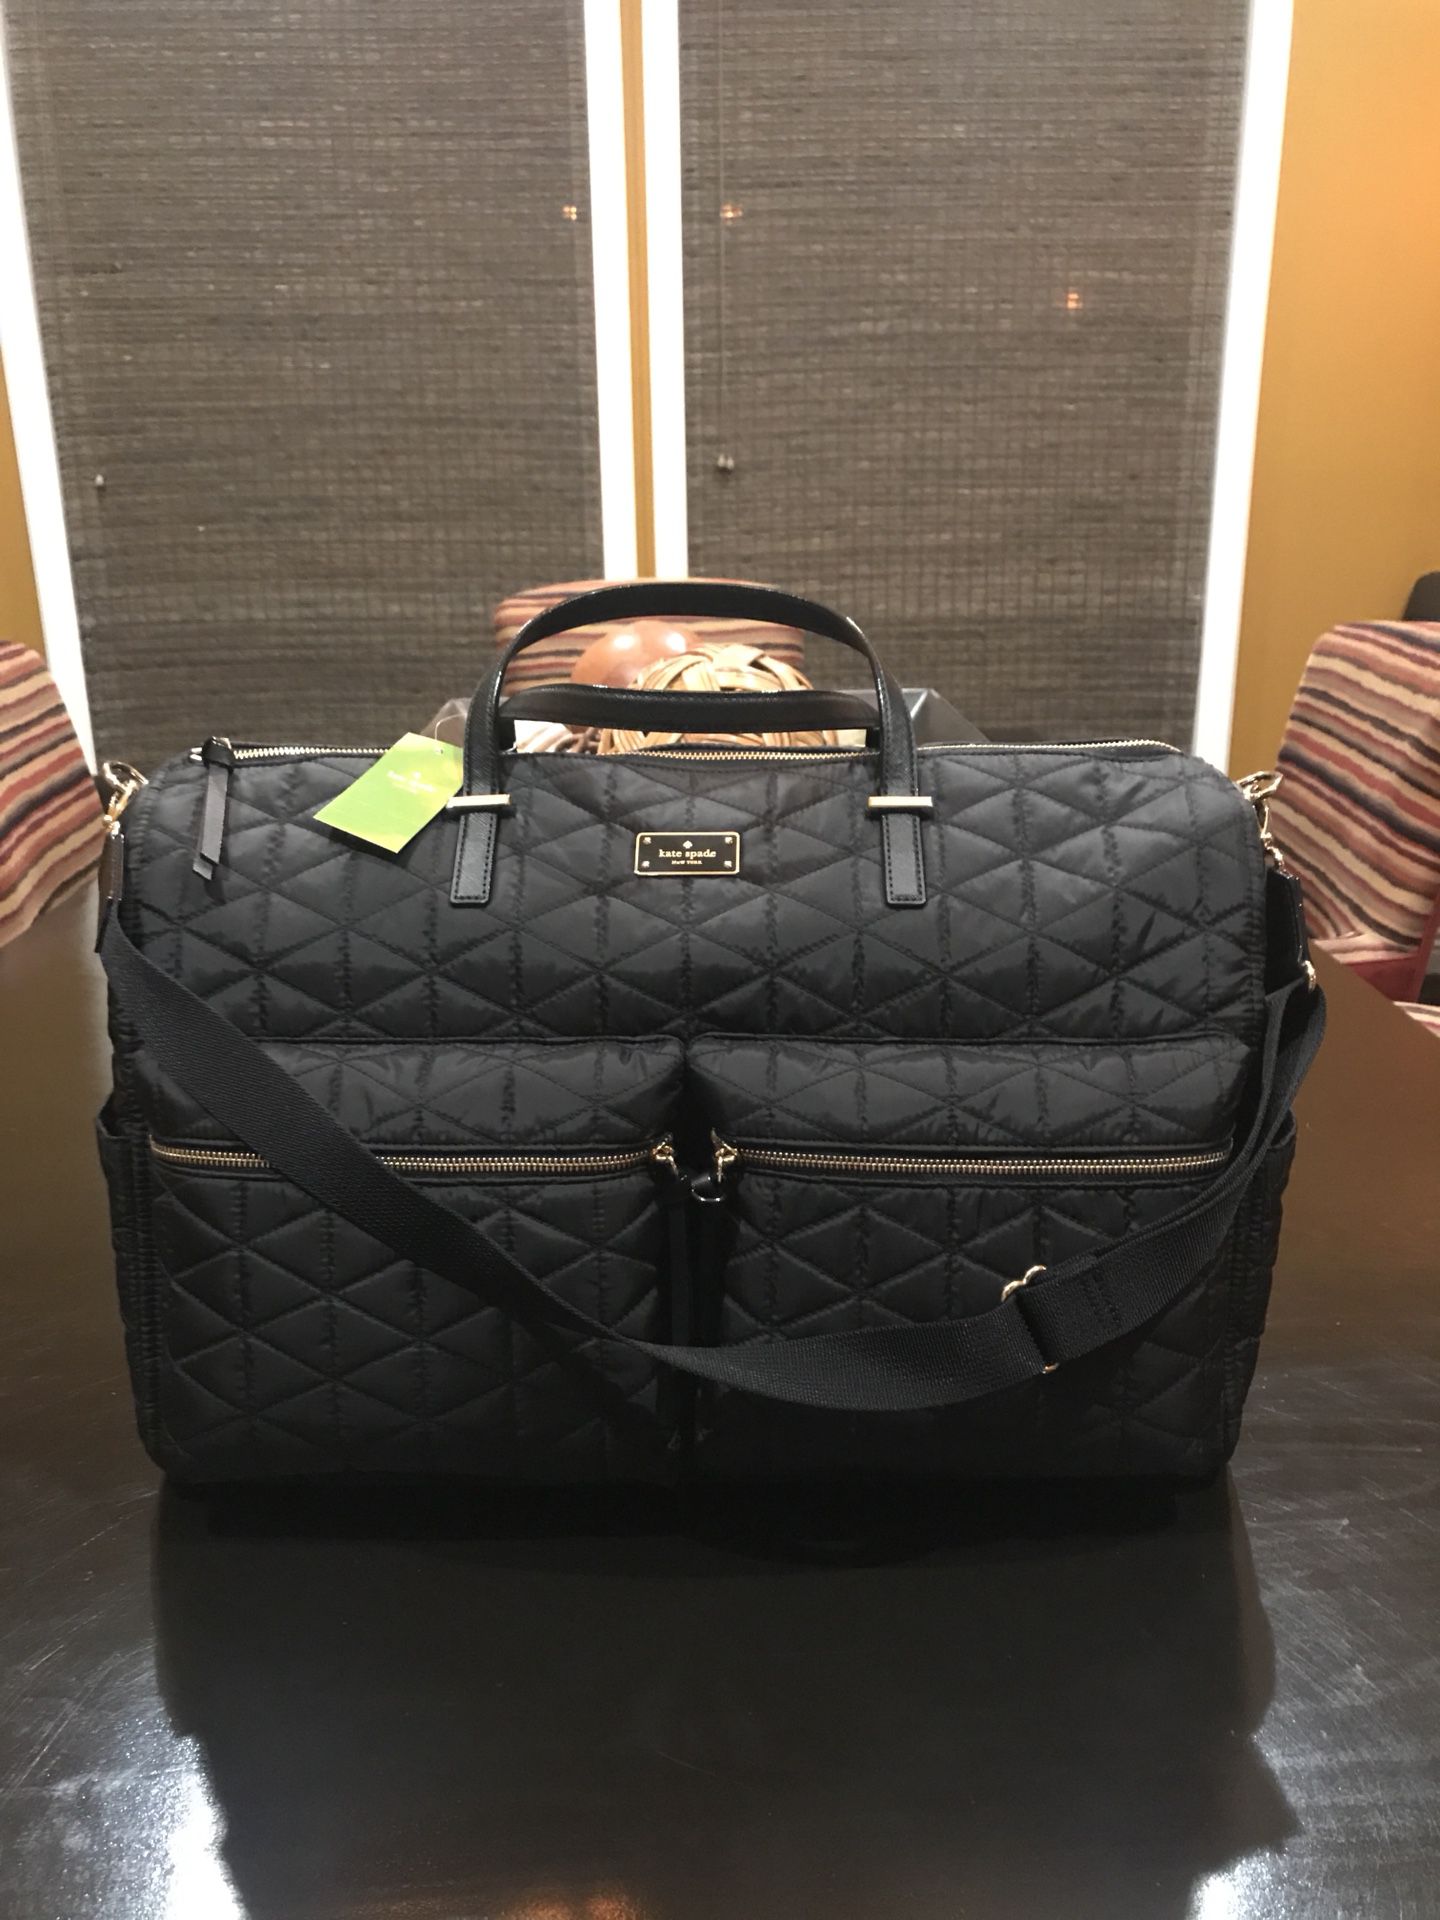 Brand New Kate Spade Duffle Bag (Carmella Wilson Road Quilted Black)  WKRU5368 for Sale in Orange, CA - OfferUp